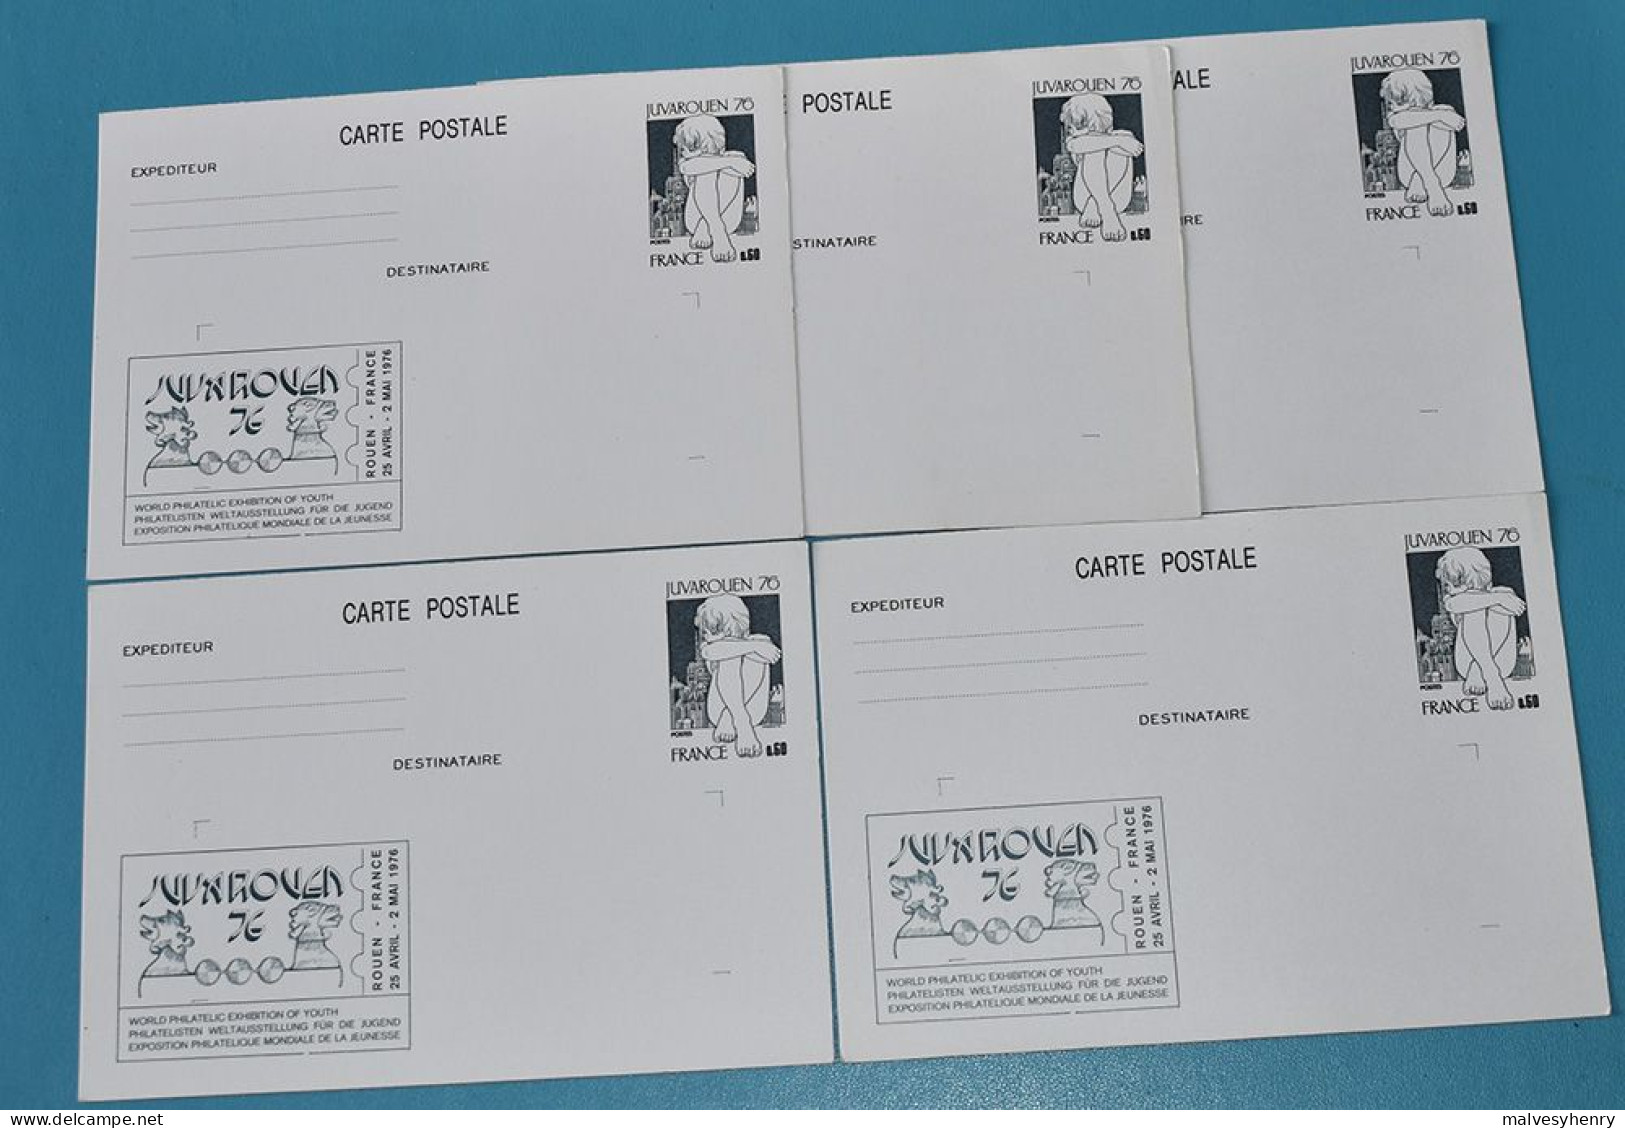 JUVAROUEN 1976 - 5 CARTES POSTALES NEUVES REPIQUAGE - JUVAROUEN 76 - Overprinter Postcards (before 1995)